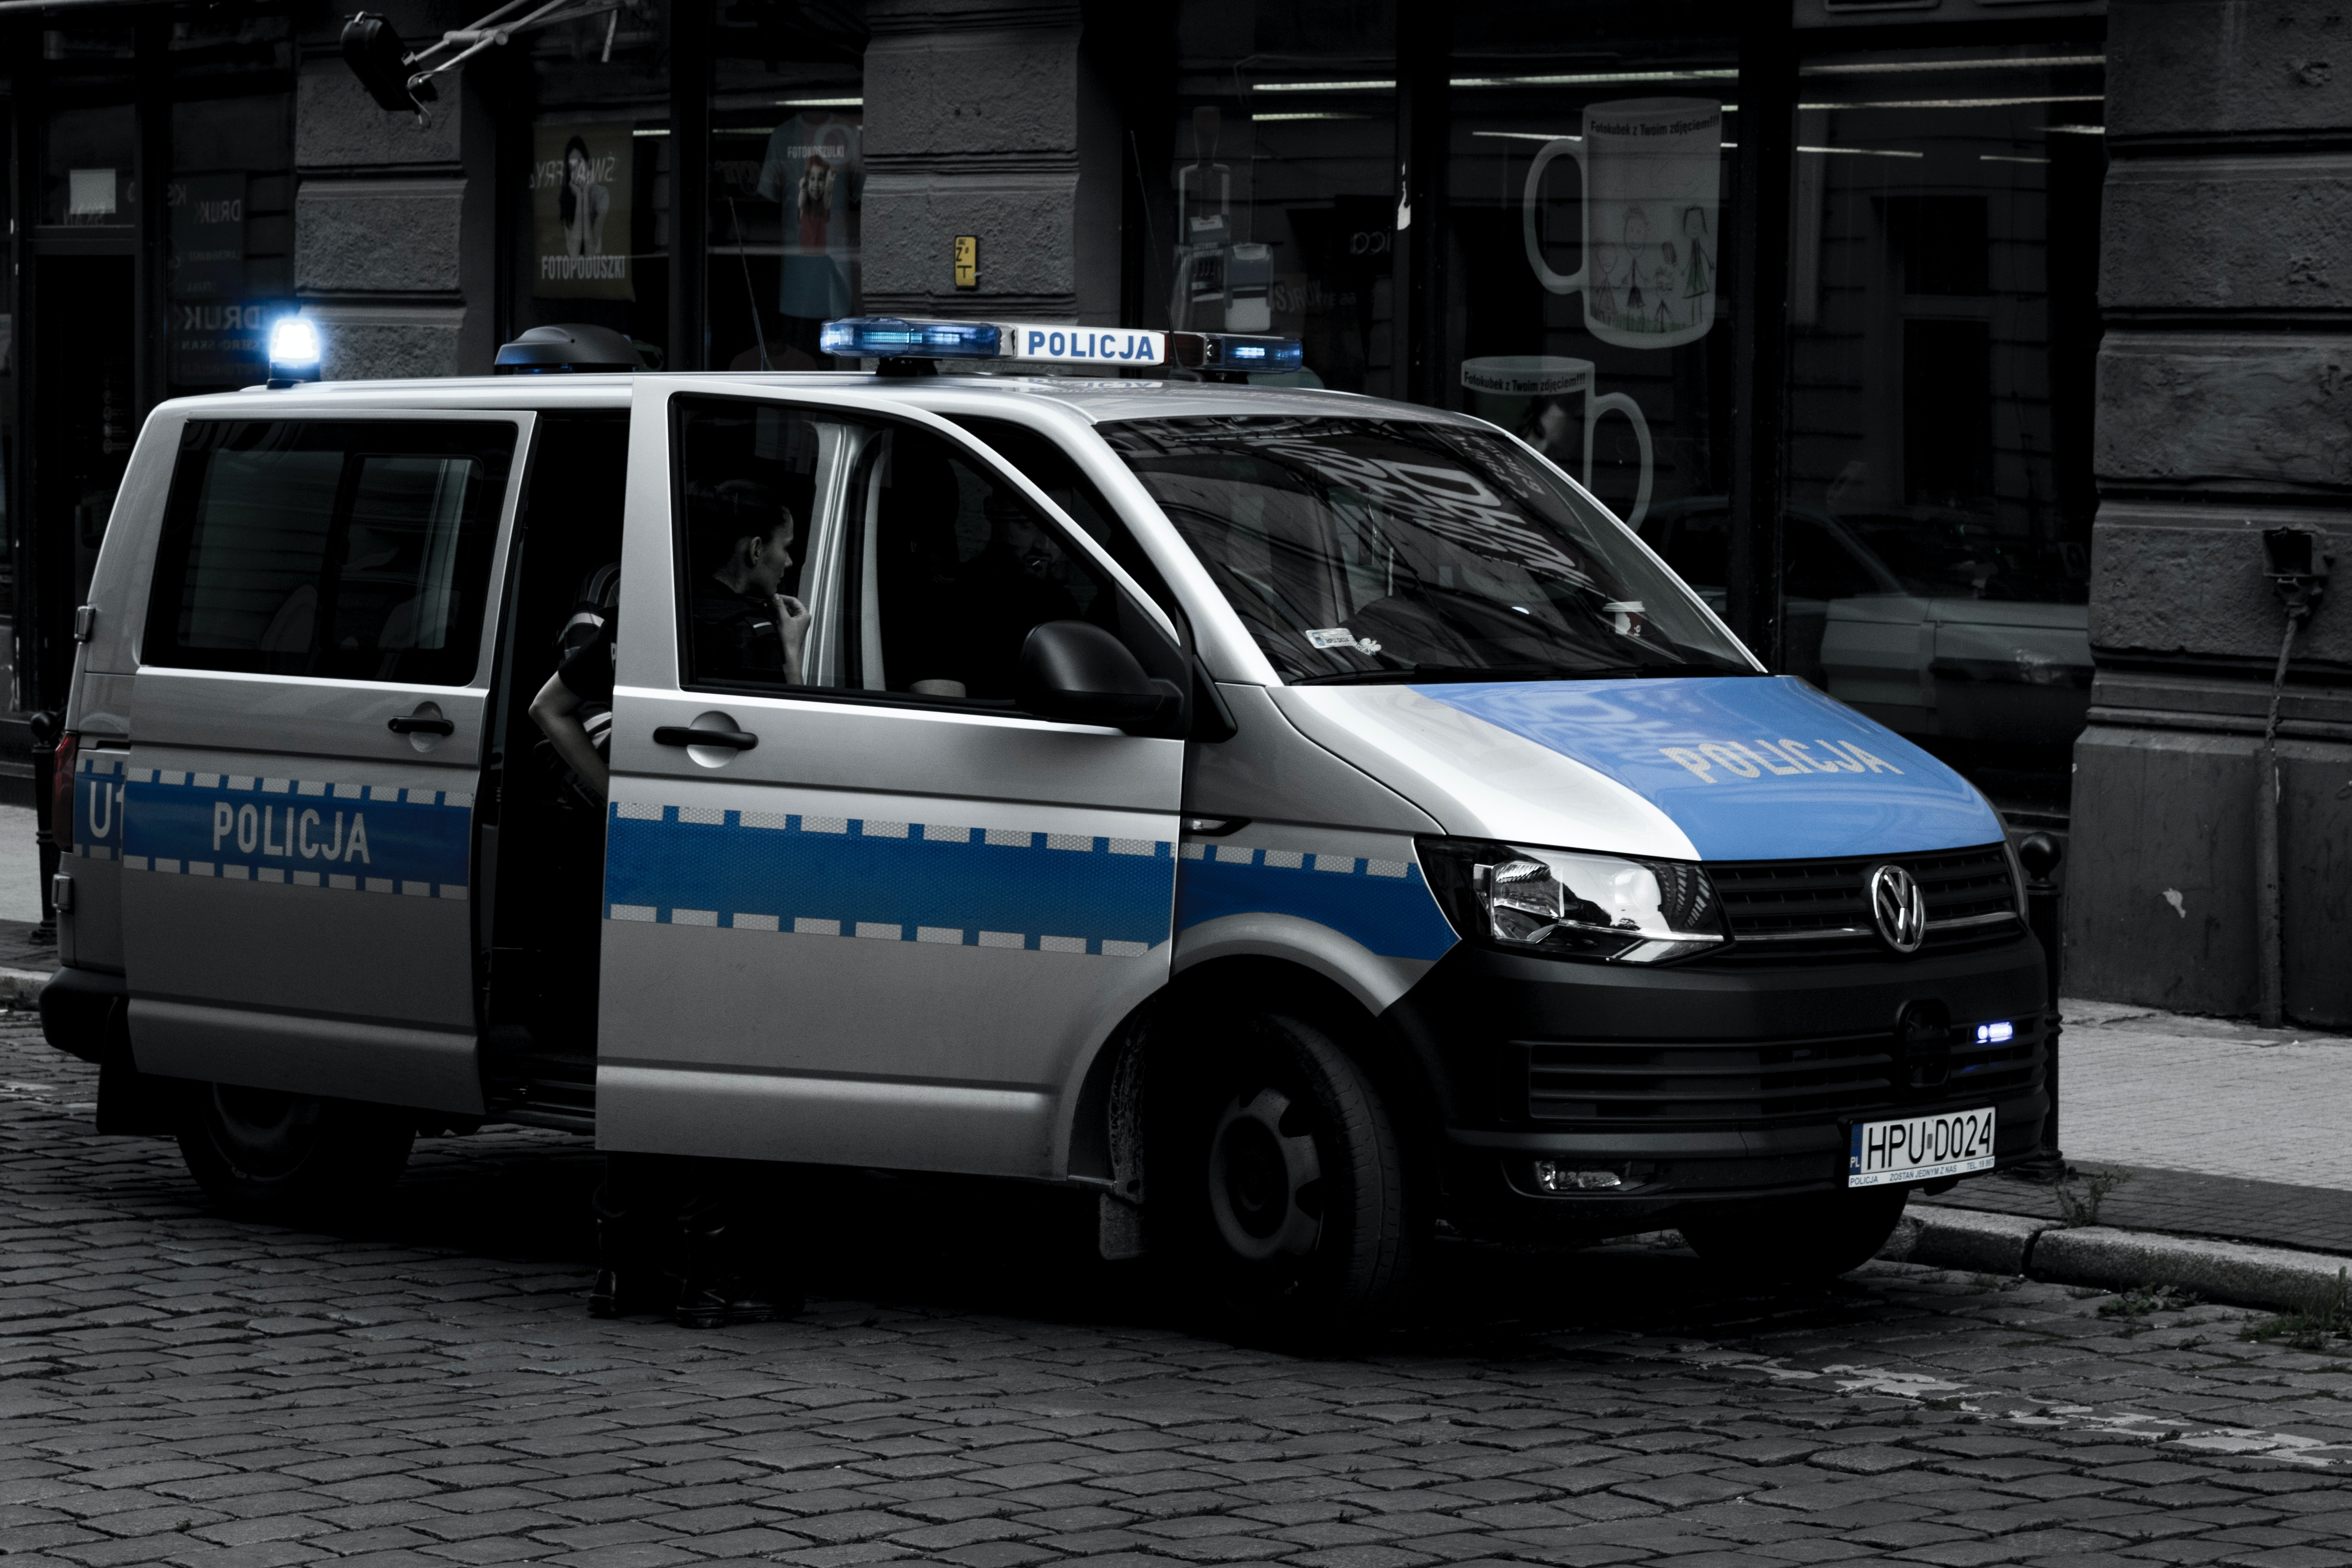 Pictured - A gray police Volkswagen van parked on the sidewalk | Source: Pexels 